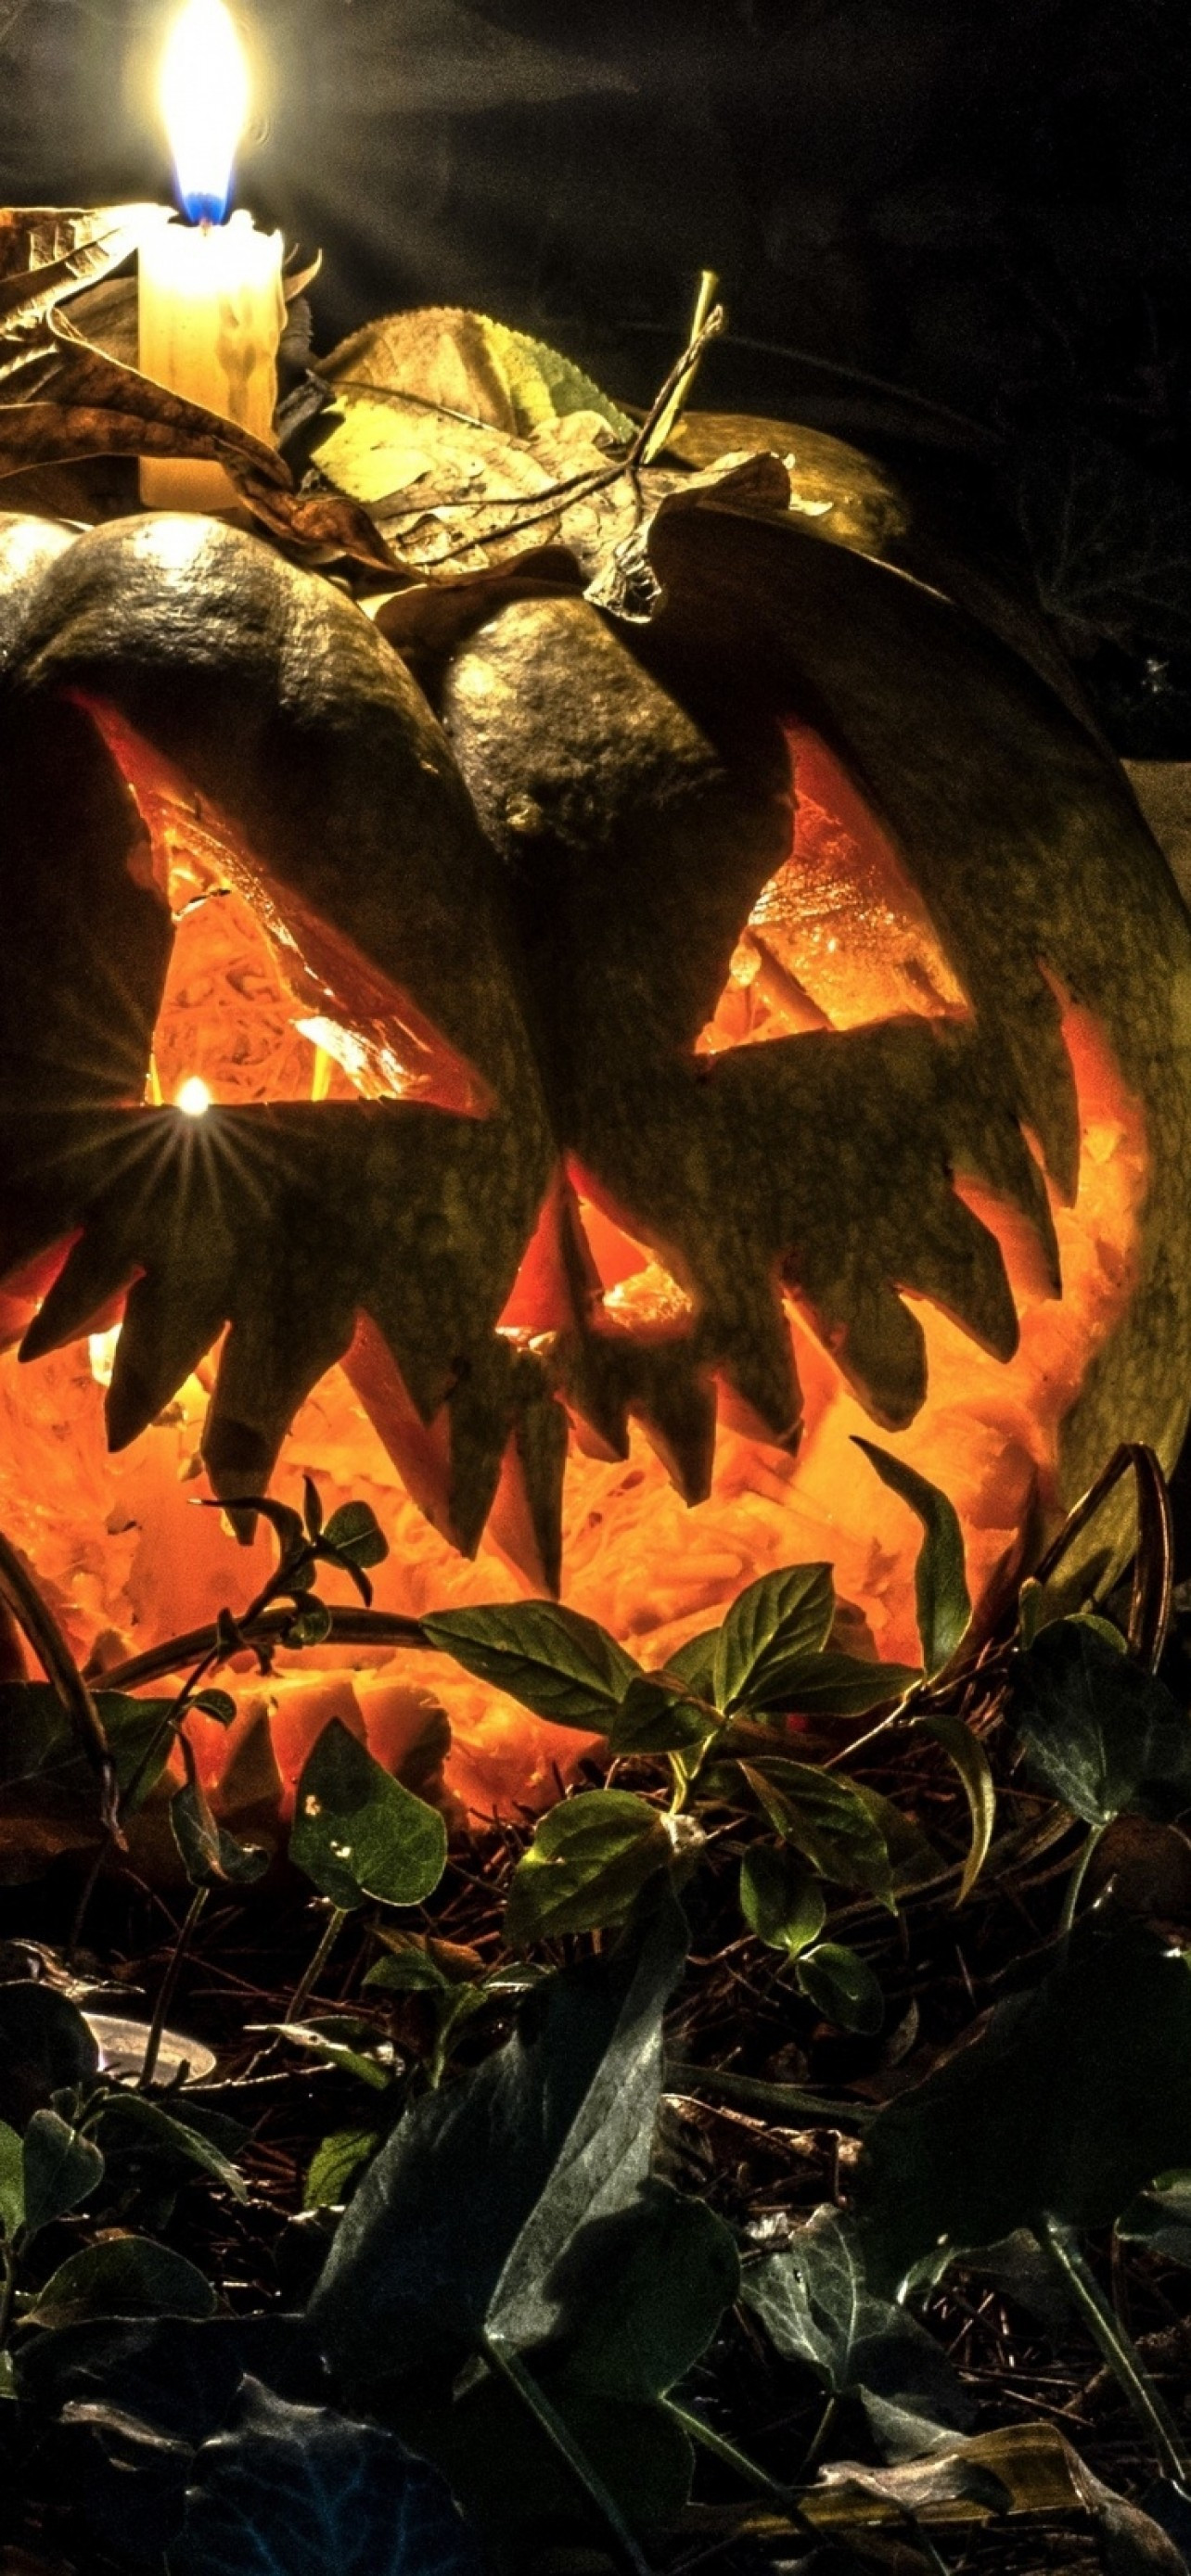 Download 1284x2778 Halloween, Pumpkin, Autumn, Night, Creepy Wallpaper for iPhone 12 Pro Max